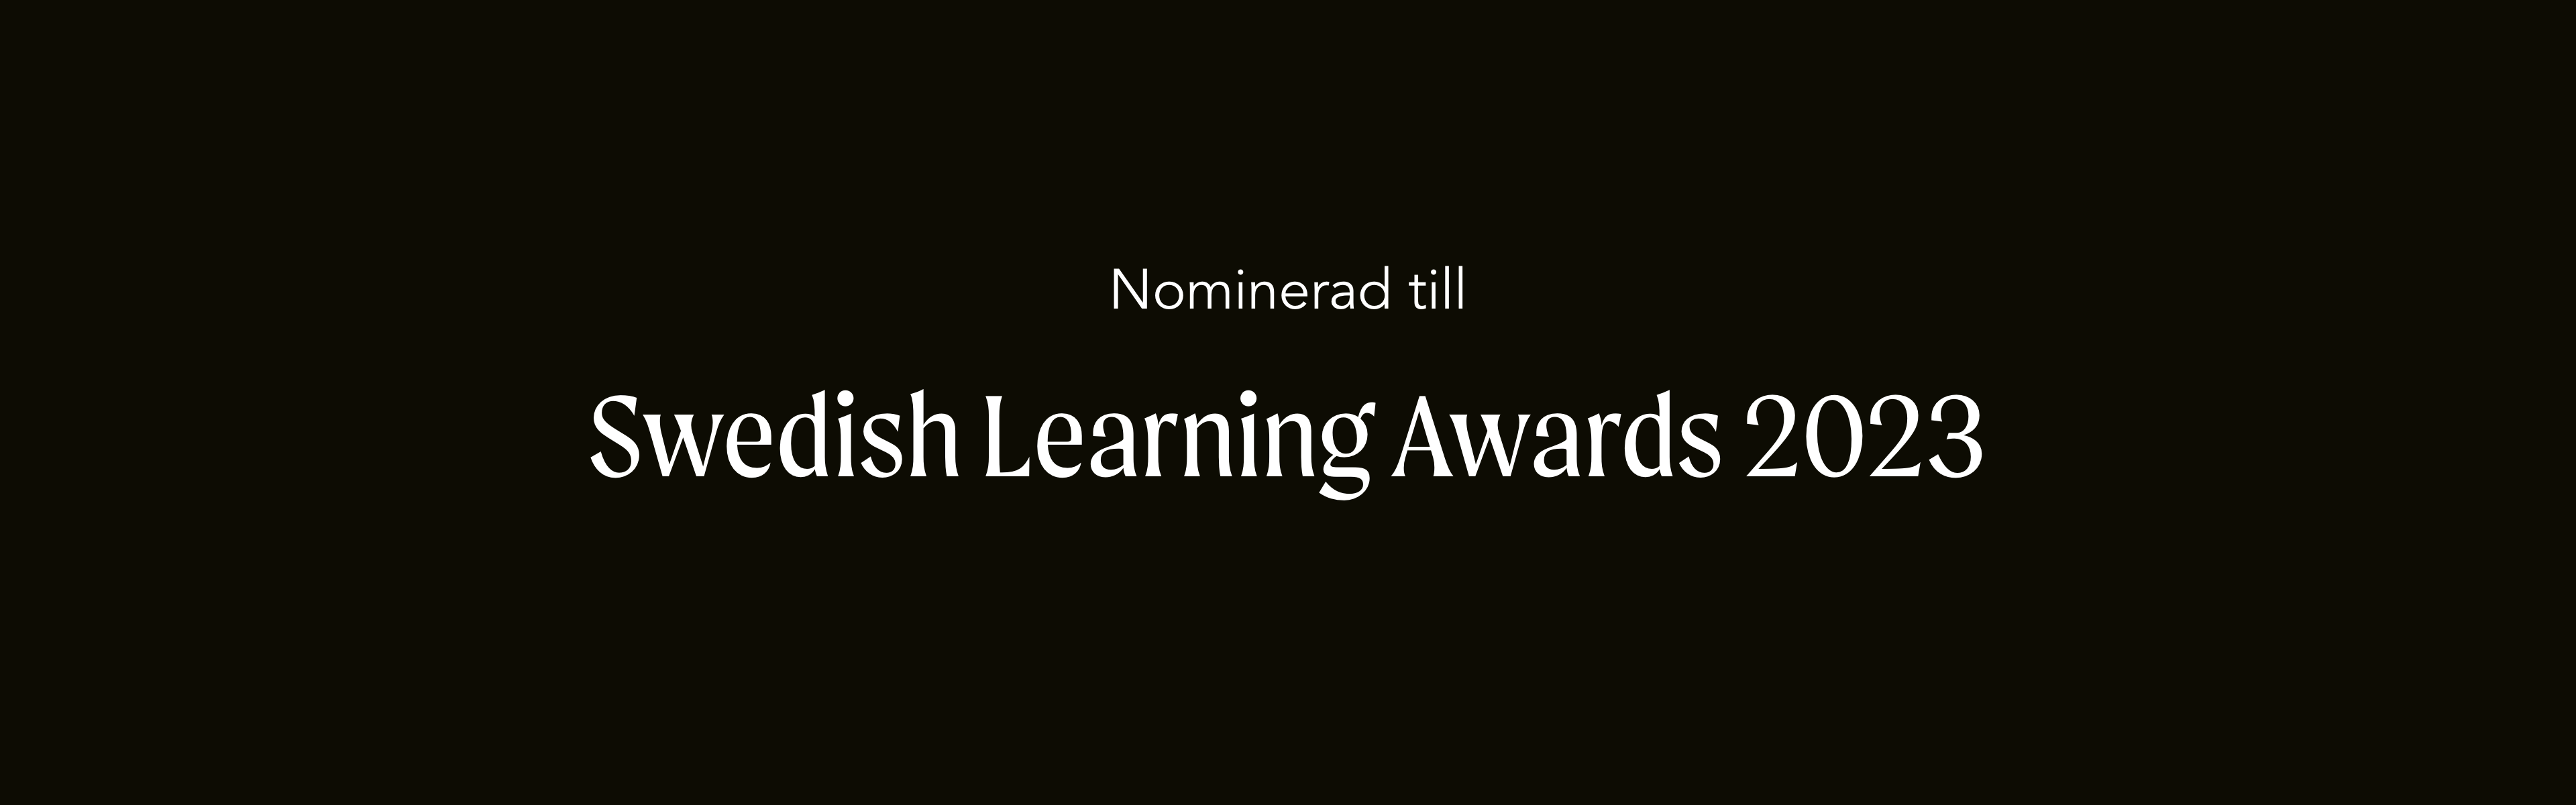 Två finalister i Swedish Learning Awards 2023!